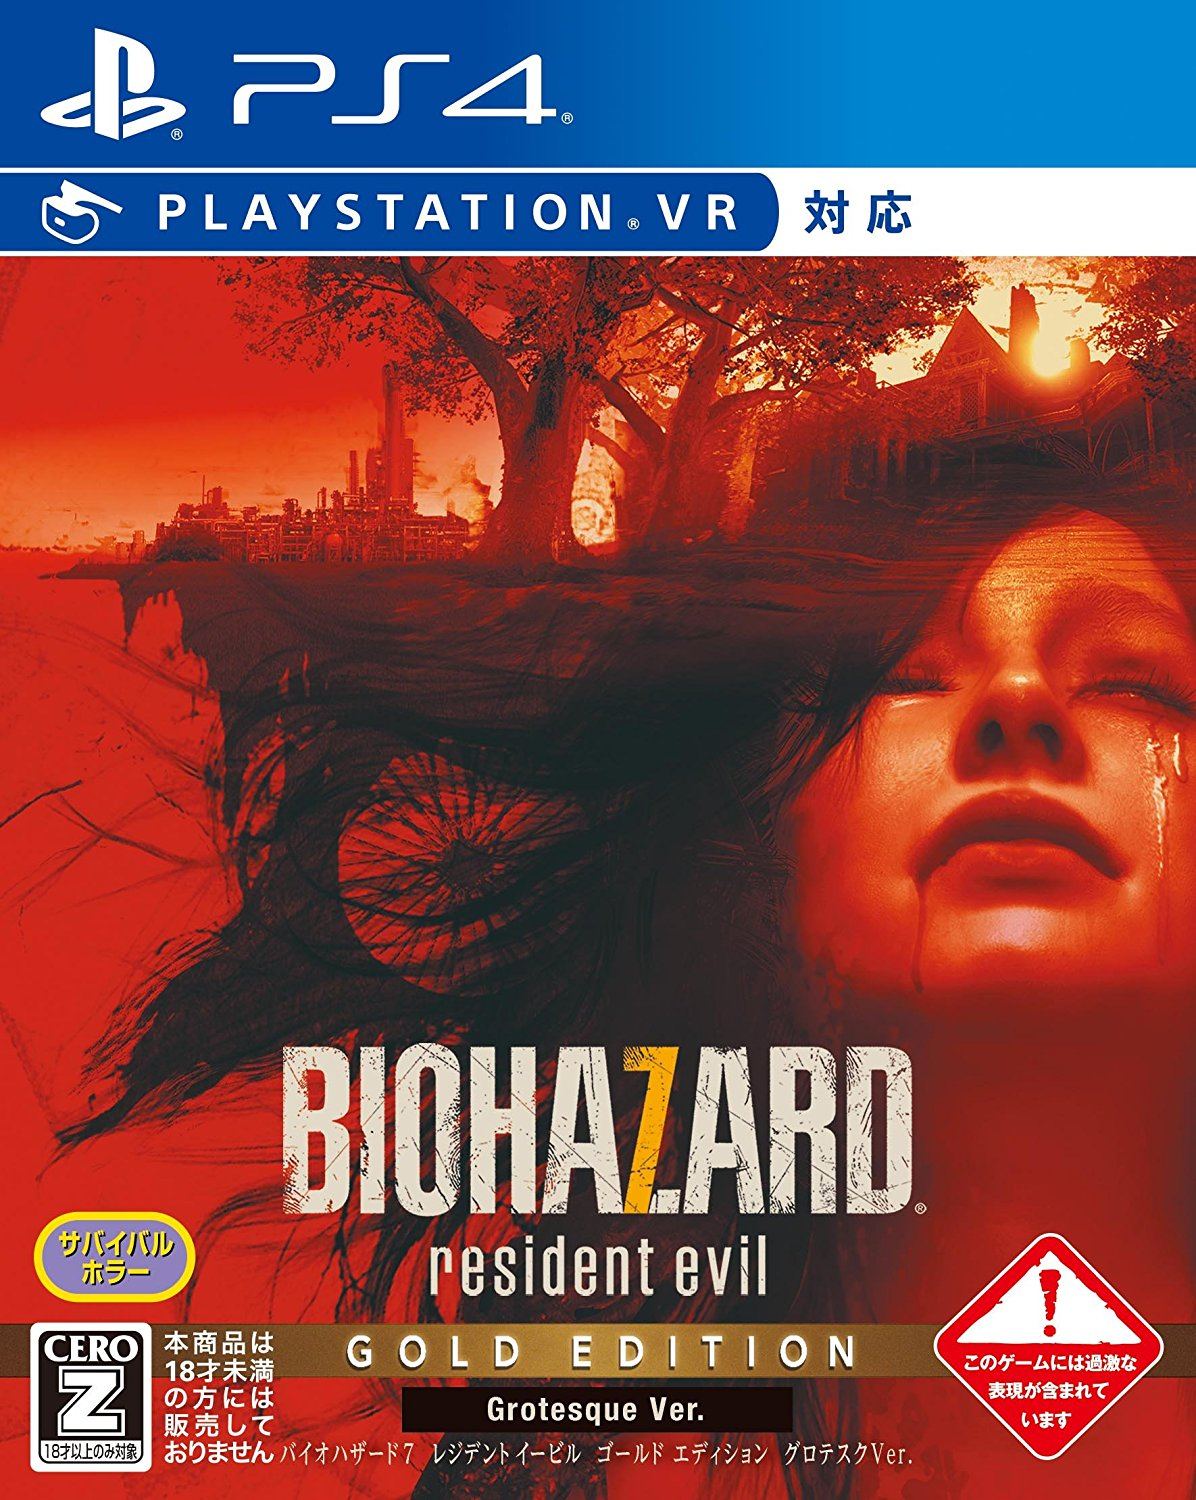 biohazard 5 mobile edition